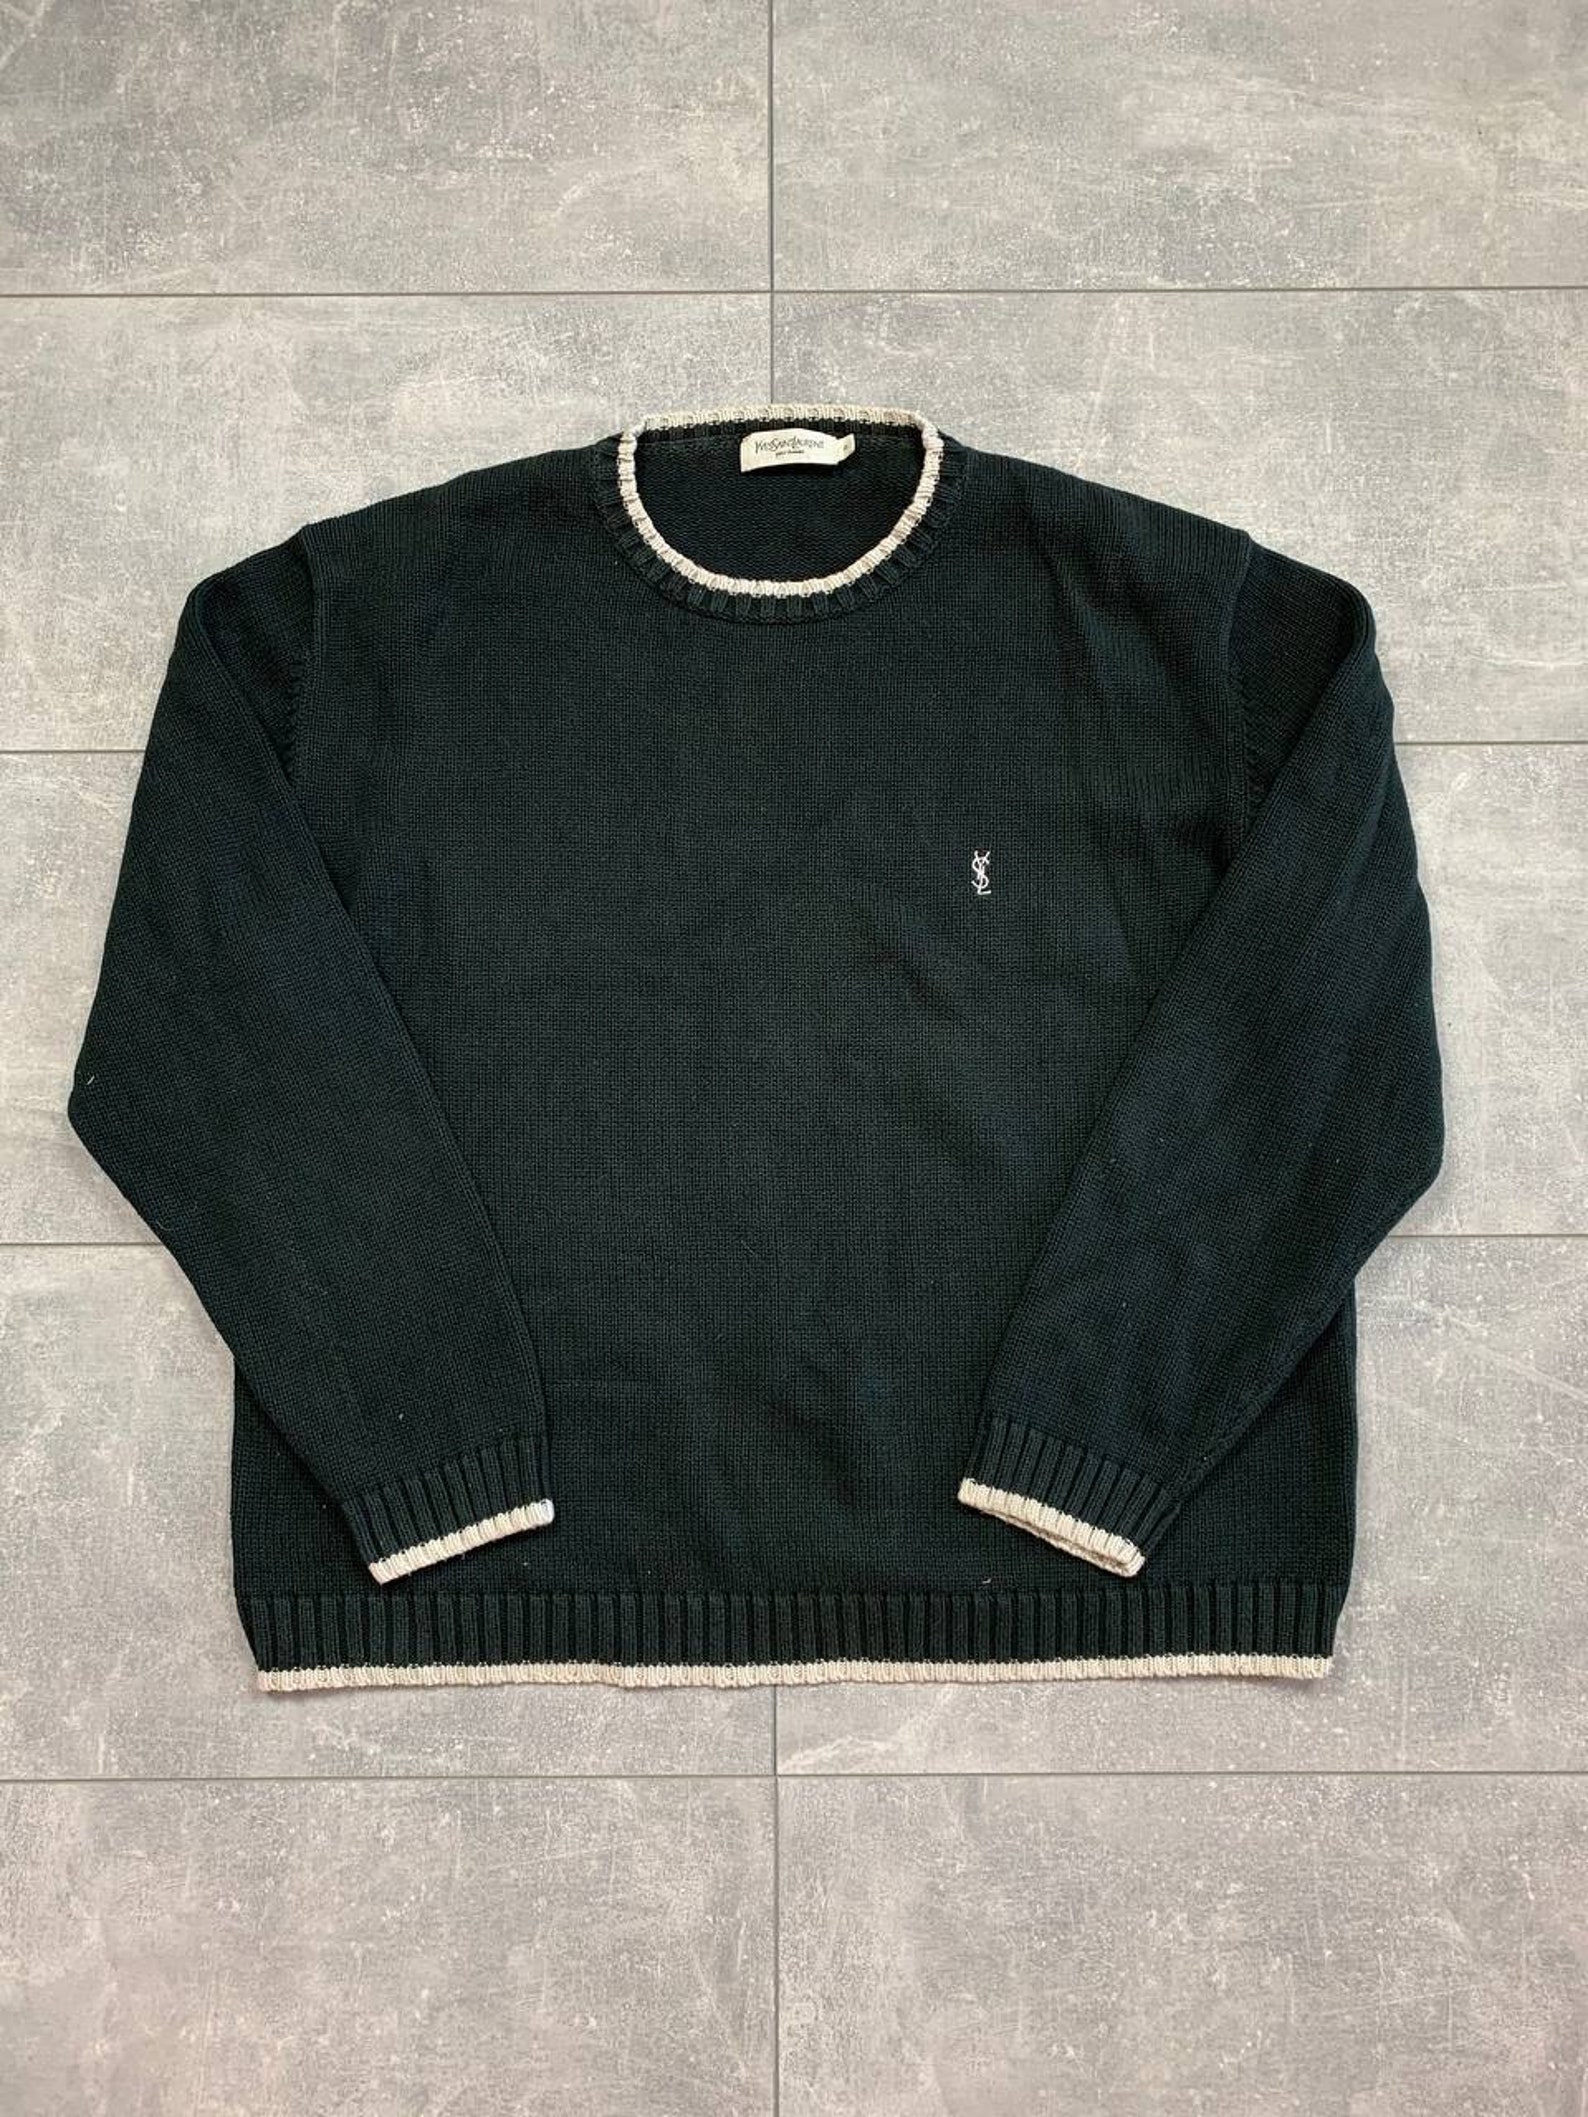 Yves saint Laurent ysl crewneck vintage sweater rare vntg 90s | Etsy